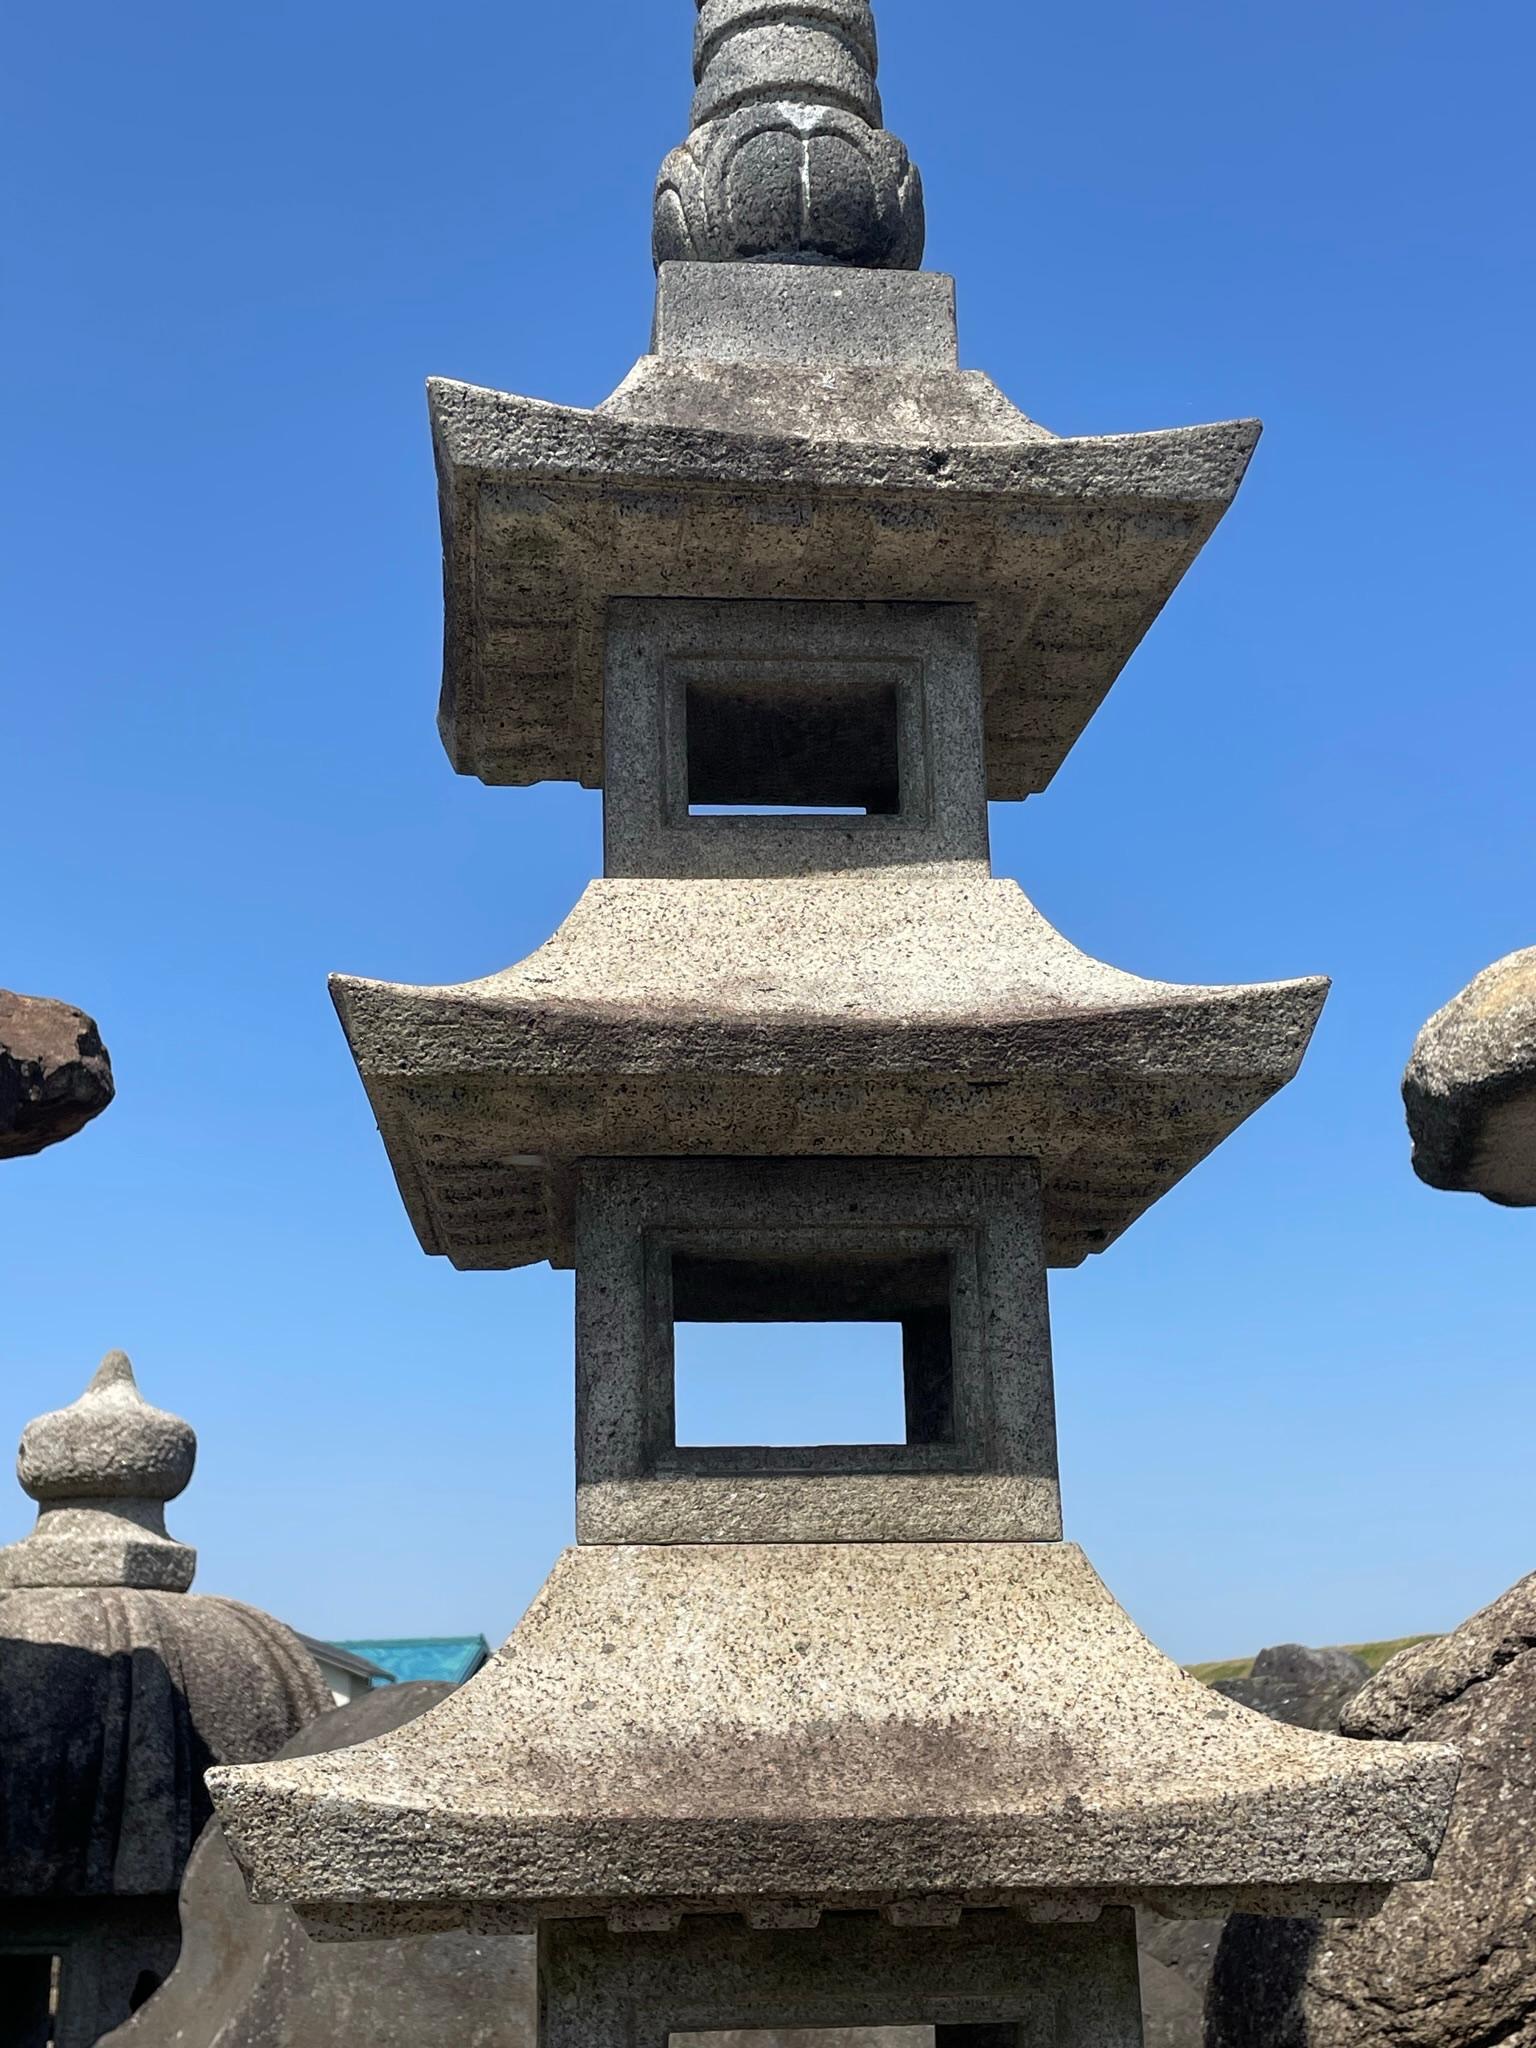 Granite Japanese Tall Antique Five Elements Stone Pagoda, 10 feet